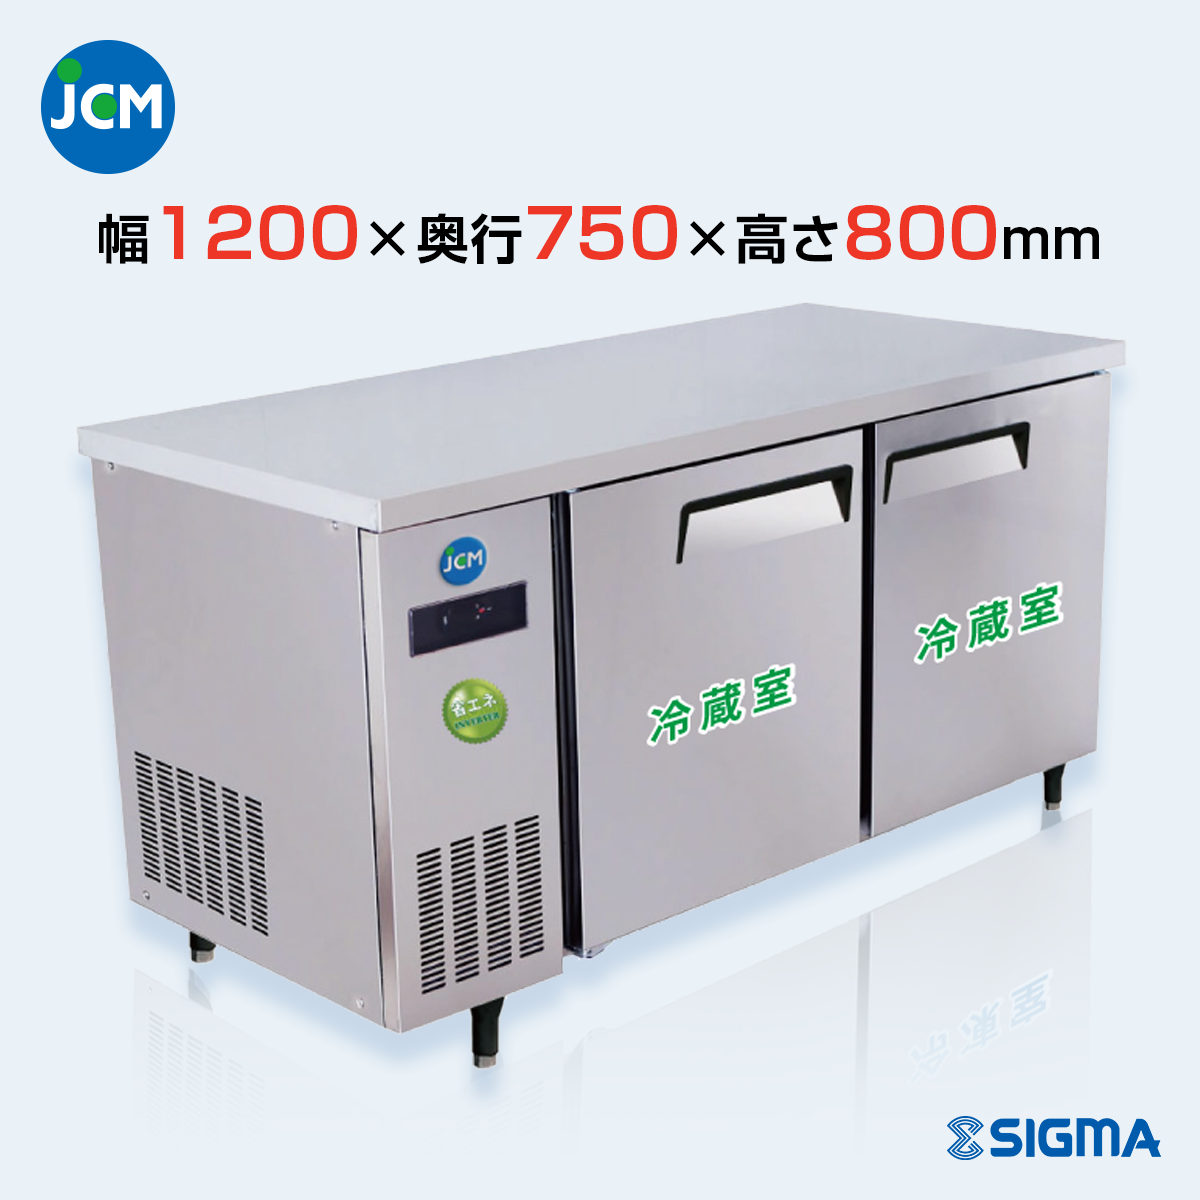 JCMR-1275T-IN 業務用 横型冷蔵庫 コールドテーブル／幅1200×奥行750×高さ800mm